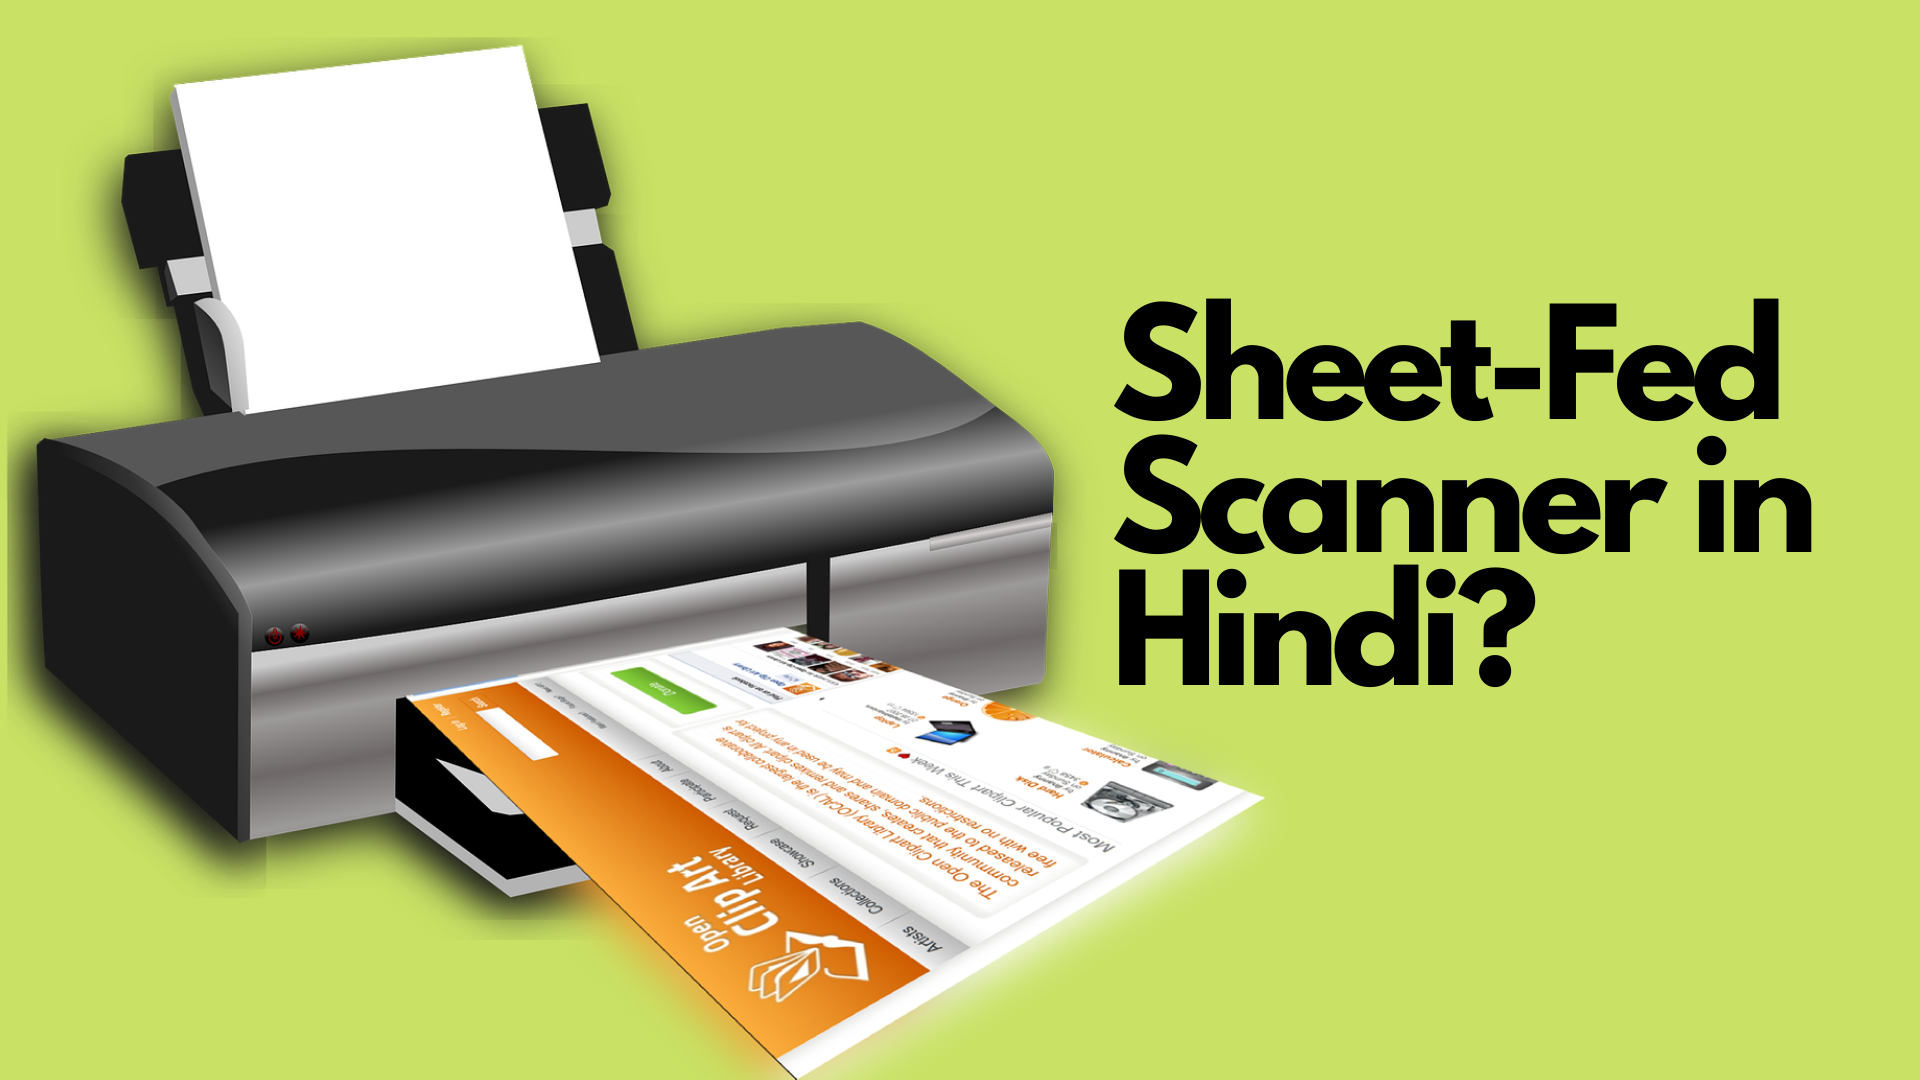 Sheet-Fed Scanner in Hindi?